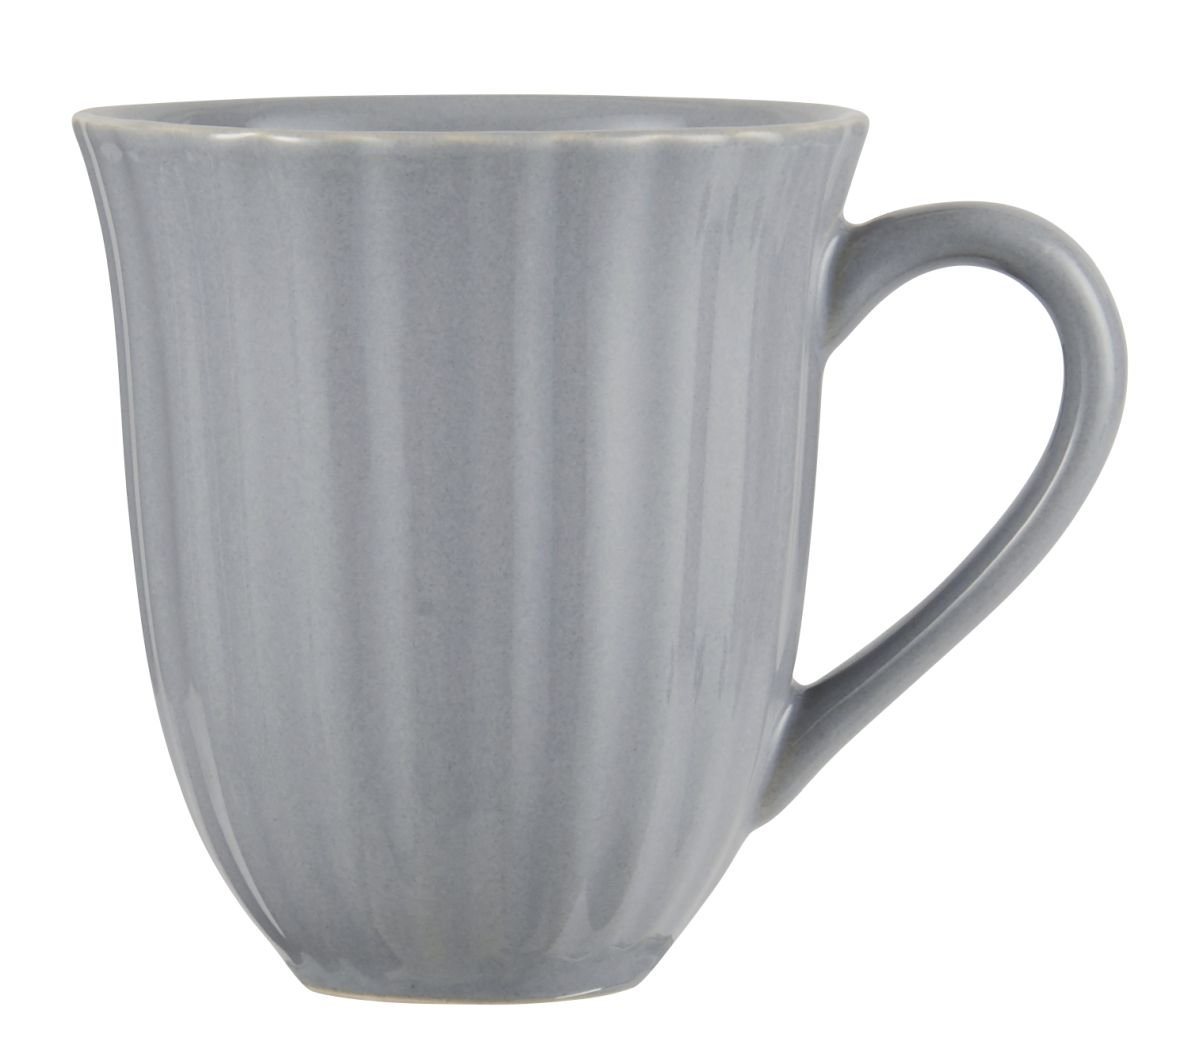 Ib Laursen Tasse Tasse Becher Kaffeetasse Kaffeebecher Mynte 300ml Ib Laursen 2088, Keramik von Ib Laursen